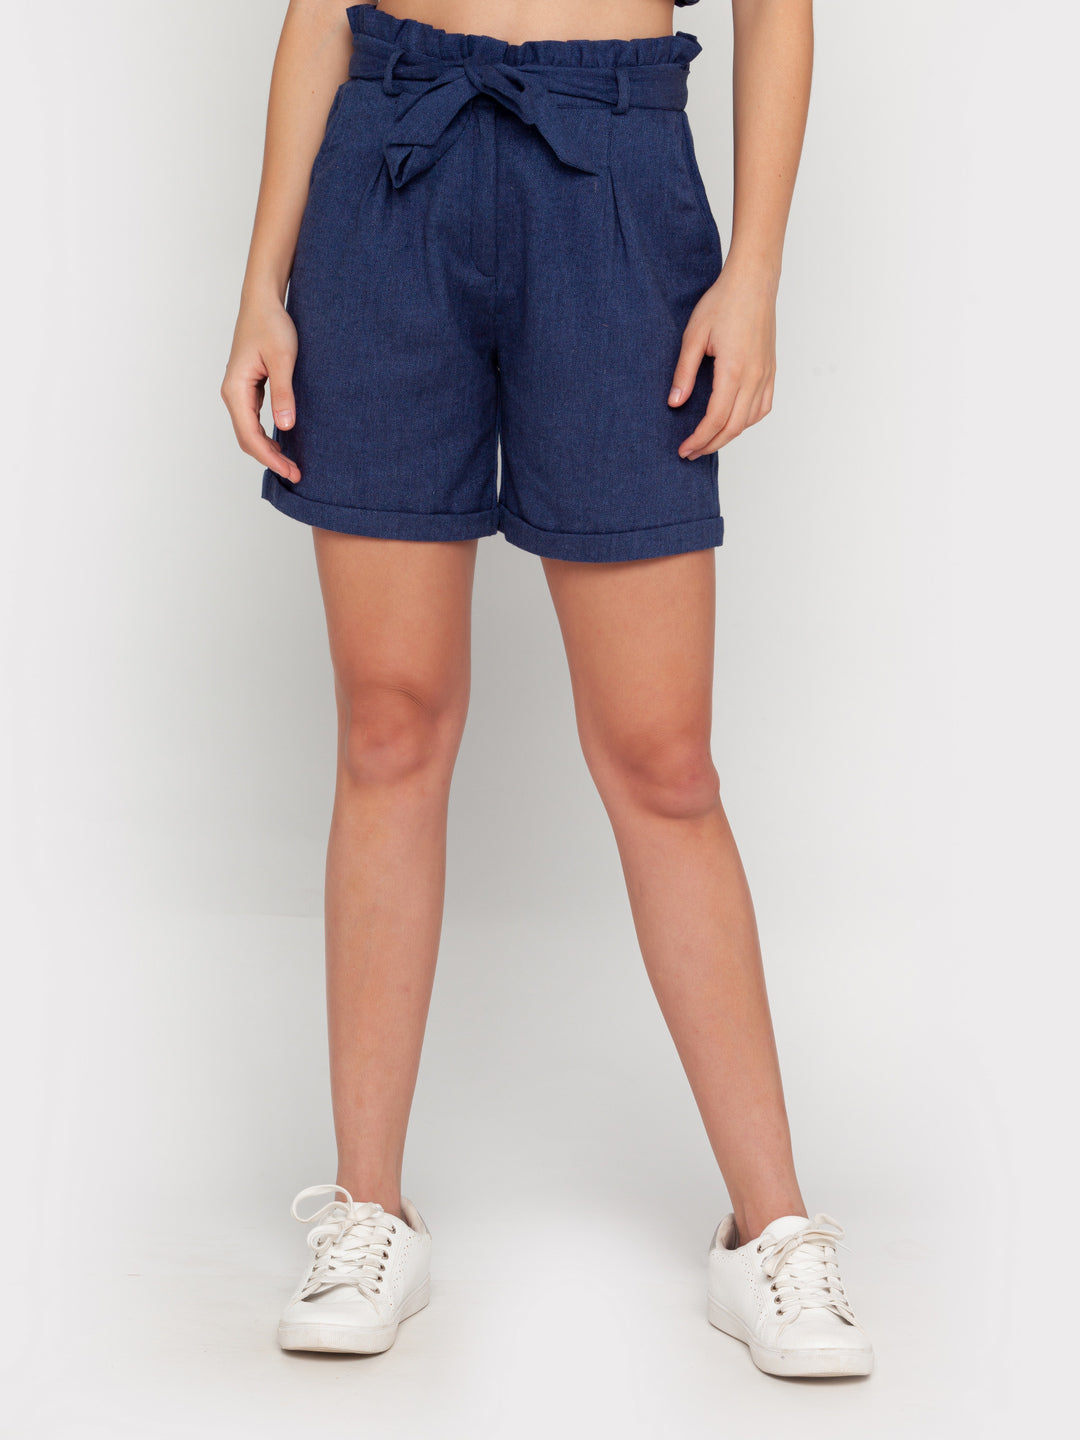 Blue Solid High Waist Shorts For Women